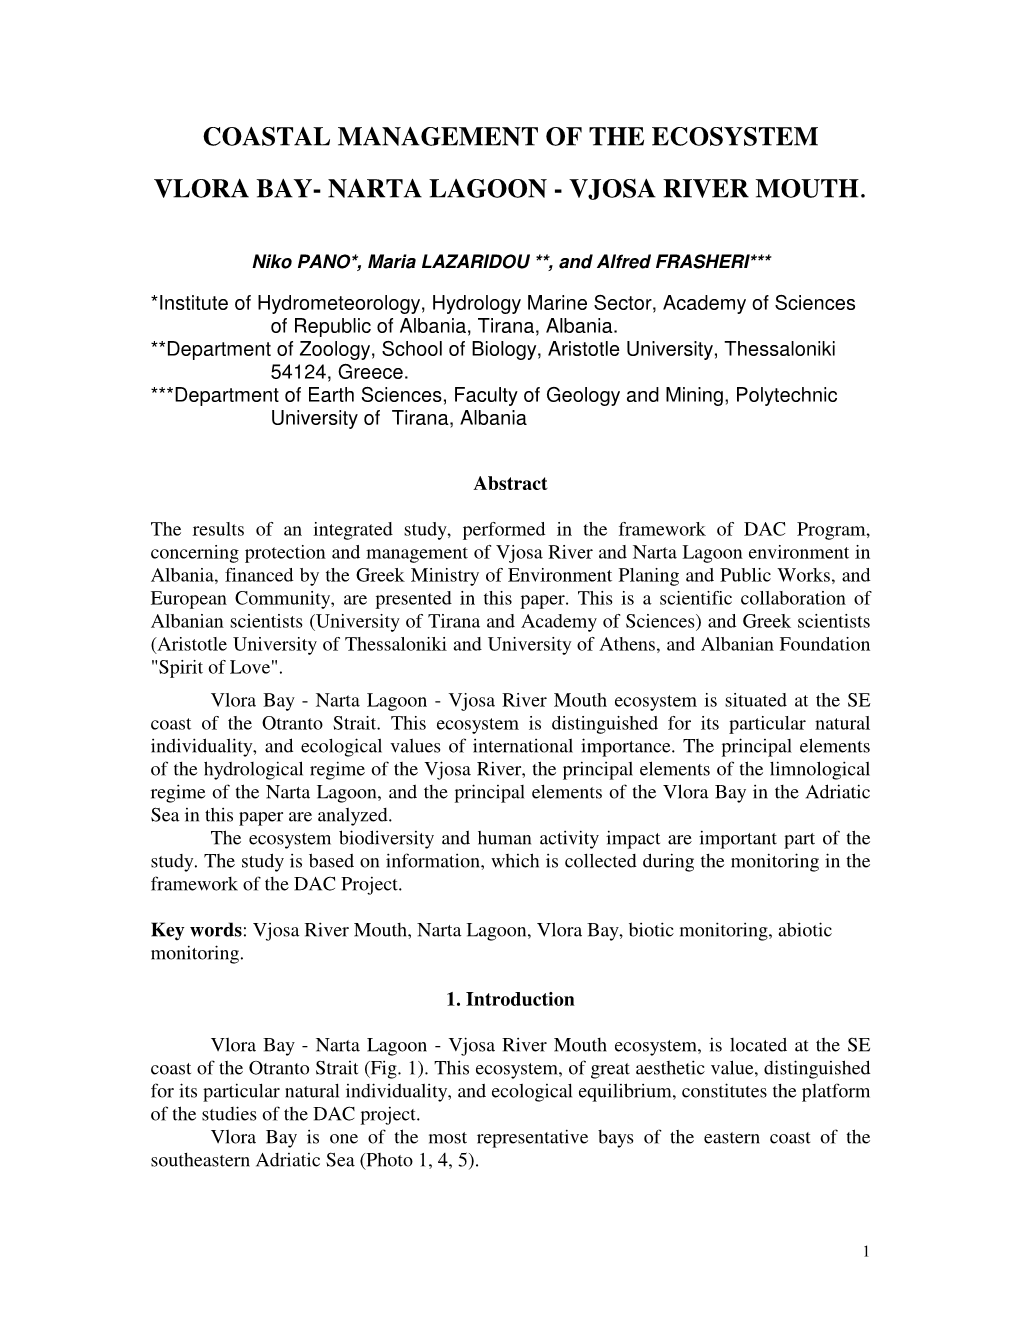 Coastal Management of the Ecosystem Vlora Bay- Narta Lagoon - Vjosa River Mouth